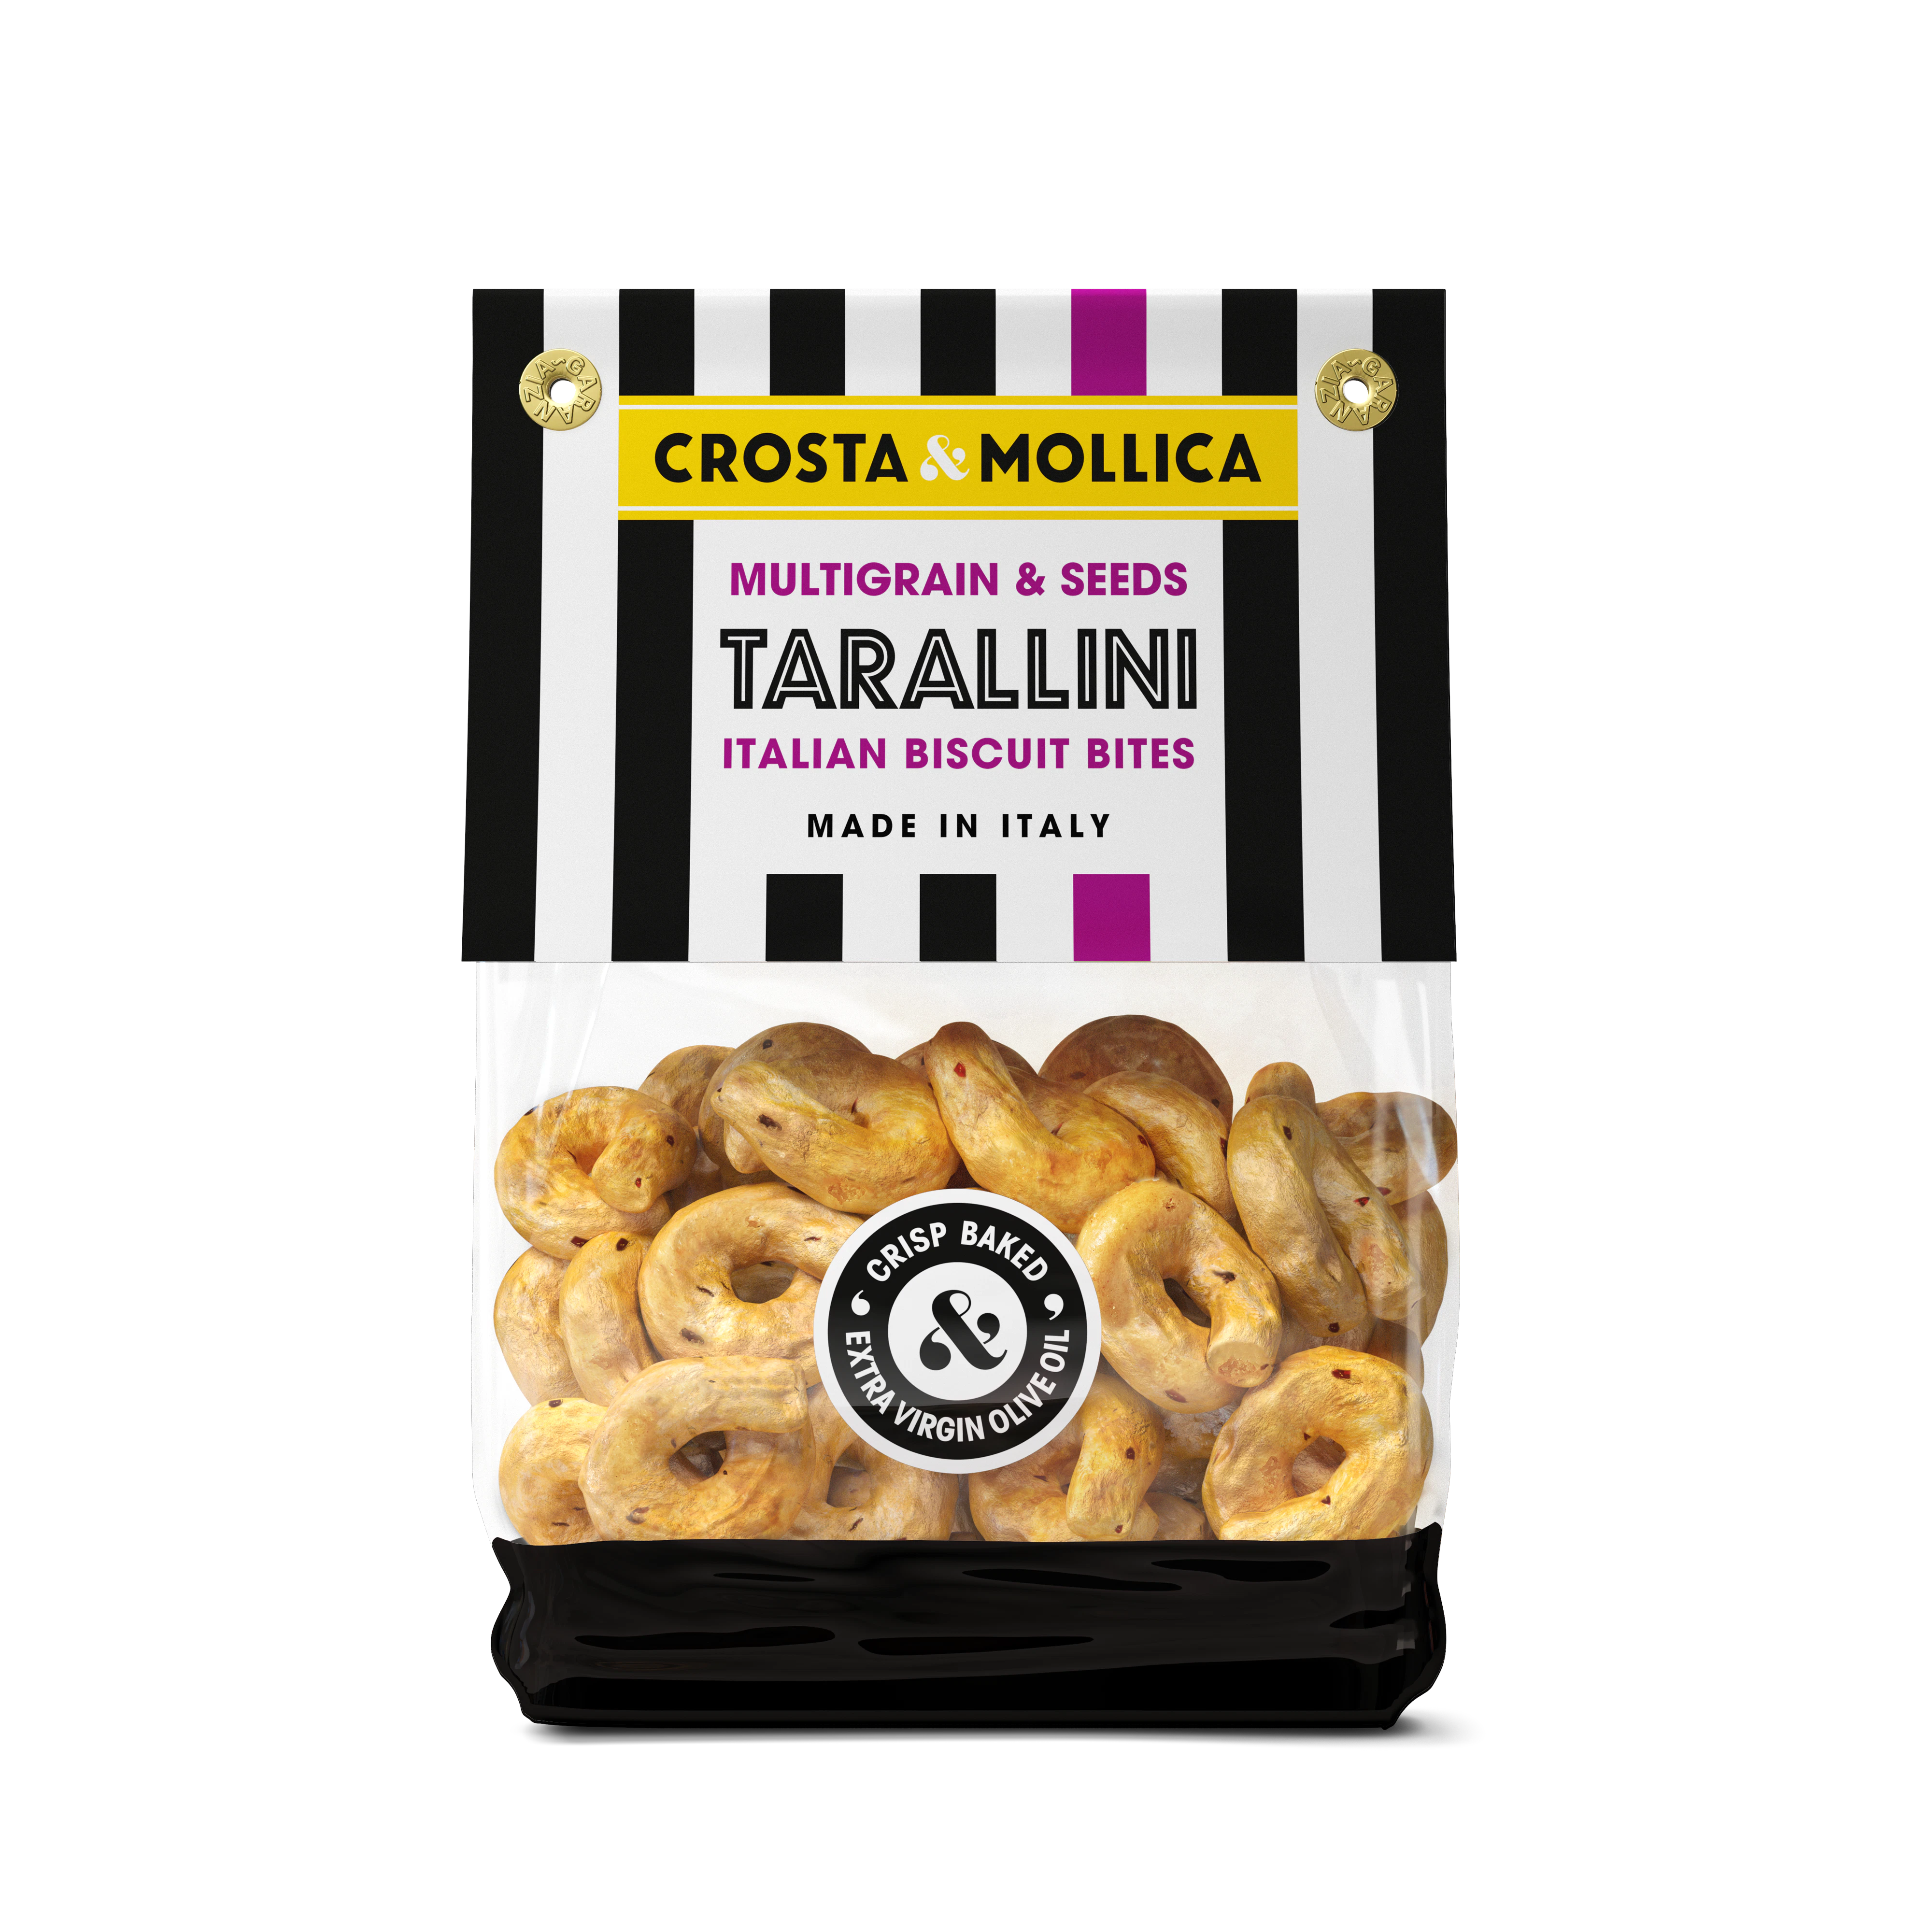 Multigrain & Seeds Tarallini packging.